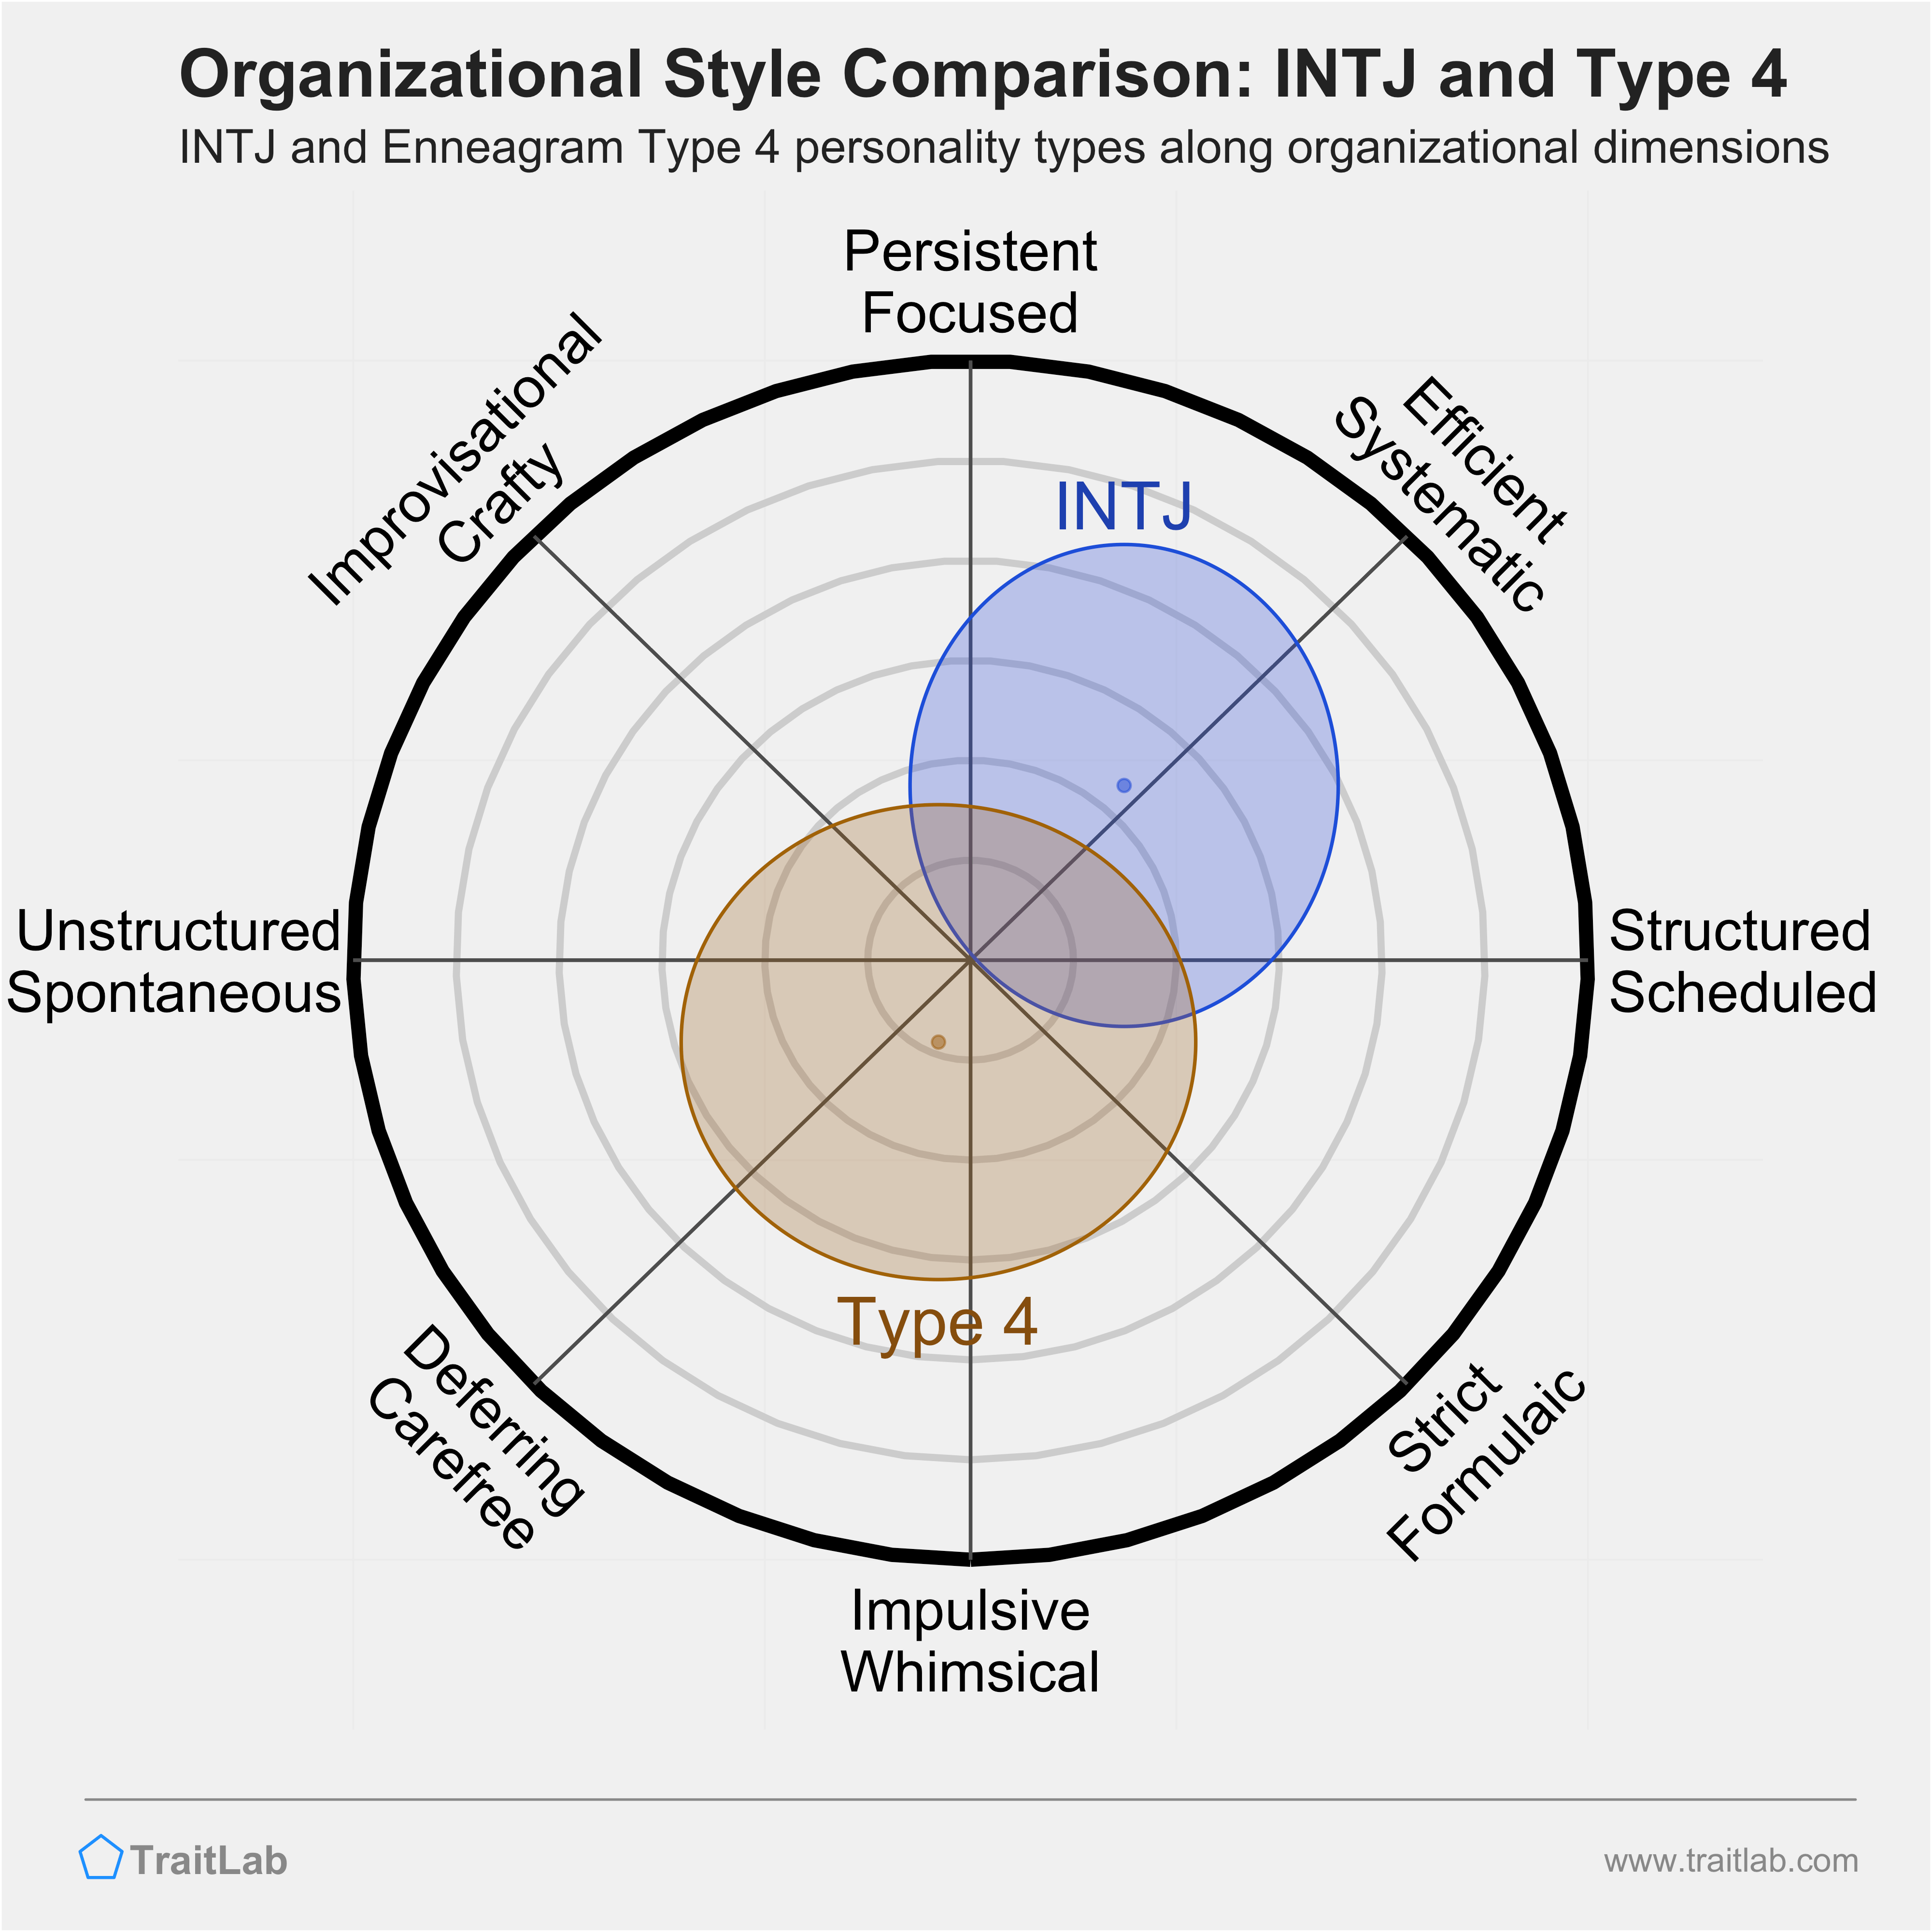 INTJ and Type 4 comparison across organizational dimensions